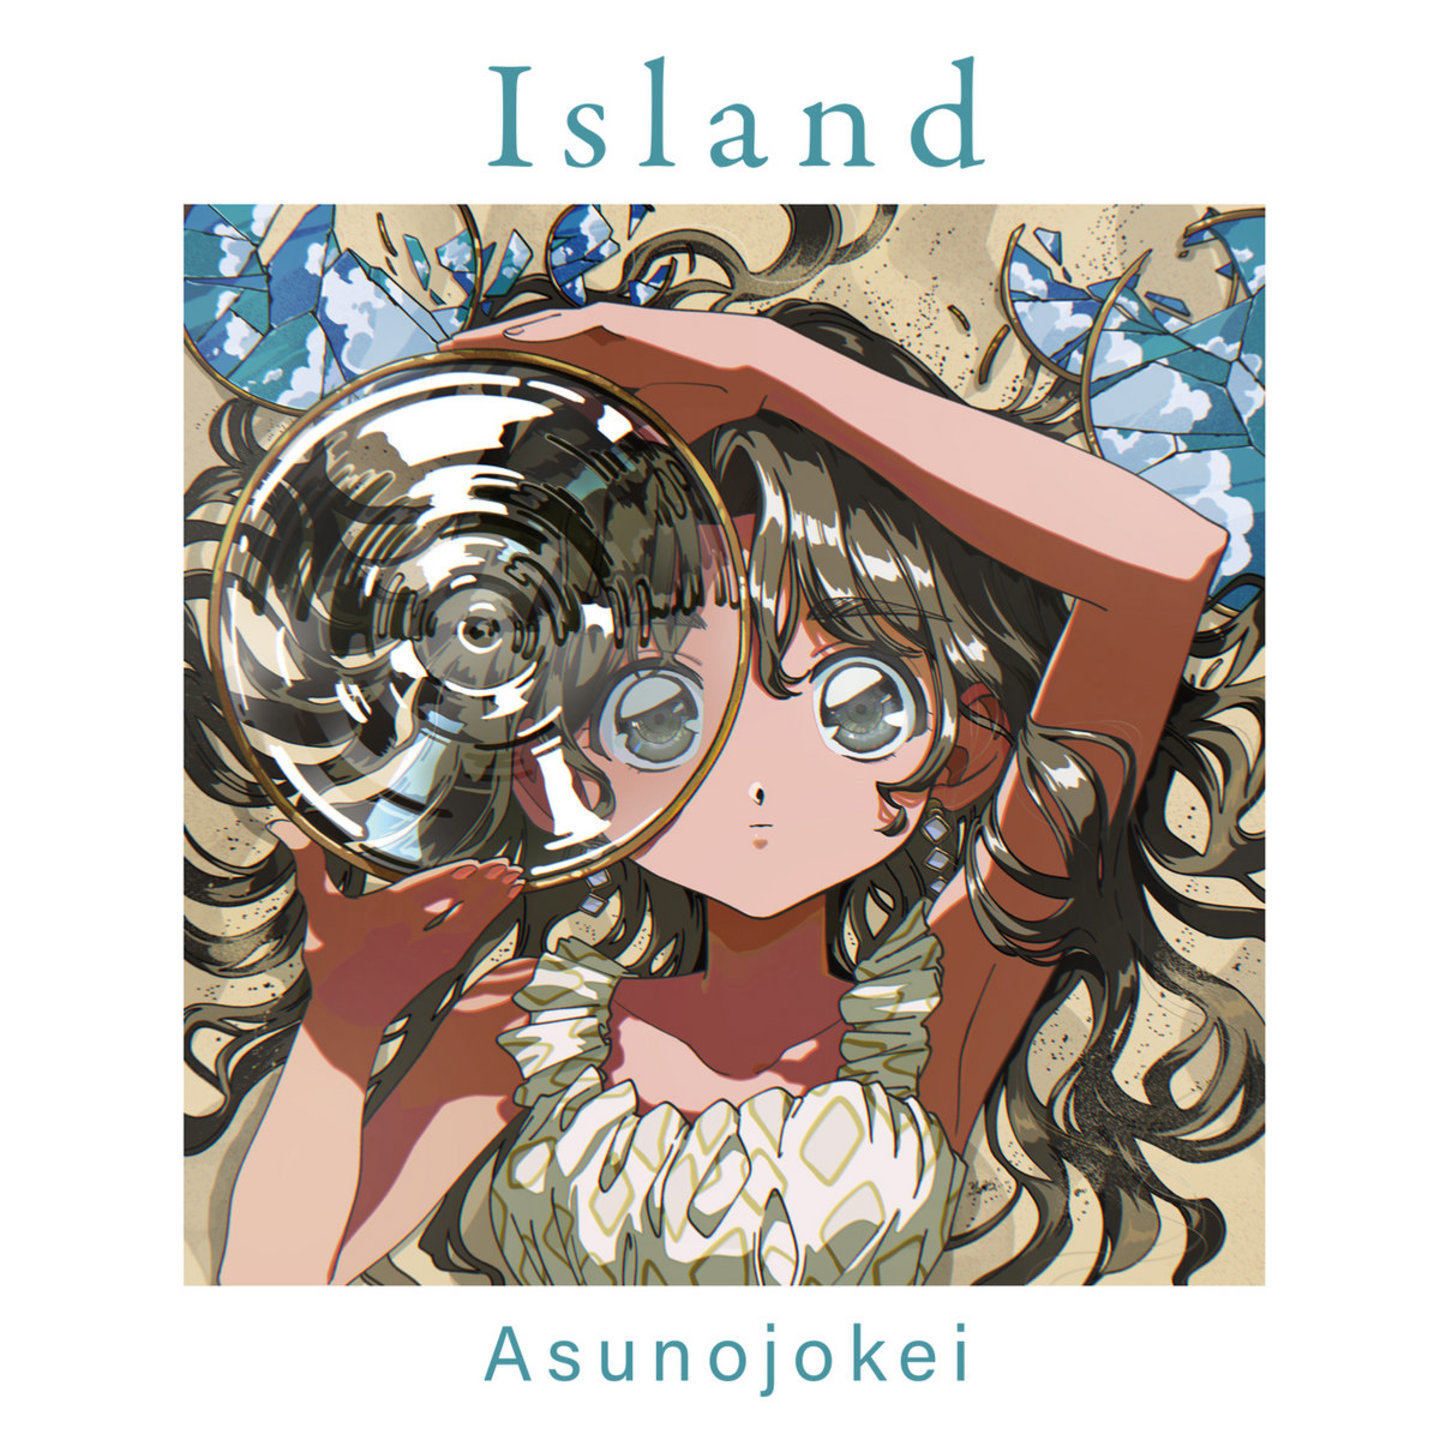 ASUNOJOKEI - Island 2xLP 180g Clear Vinyl